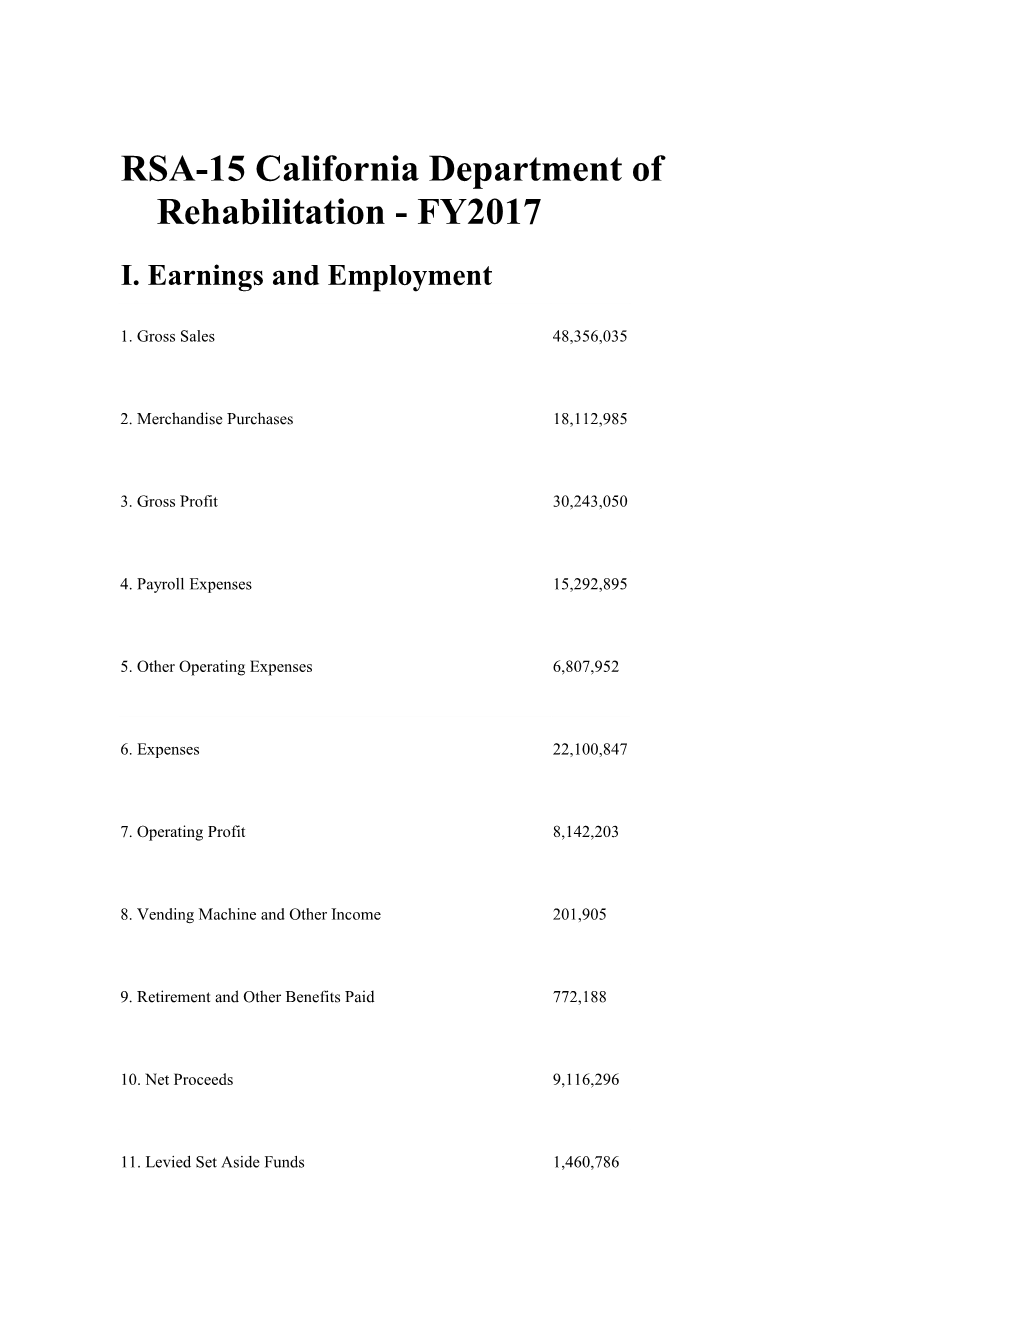 RSA-15 California Department of Rehabilitation - FY2017